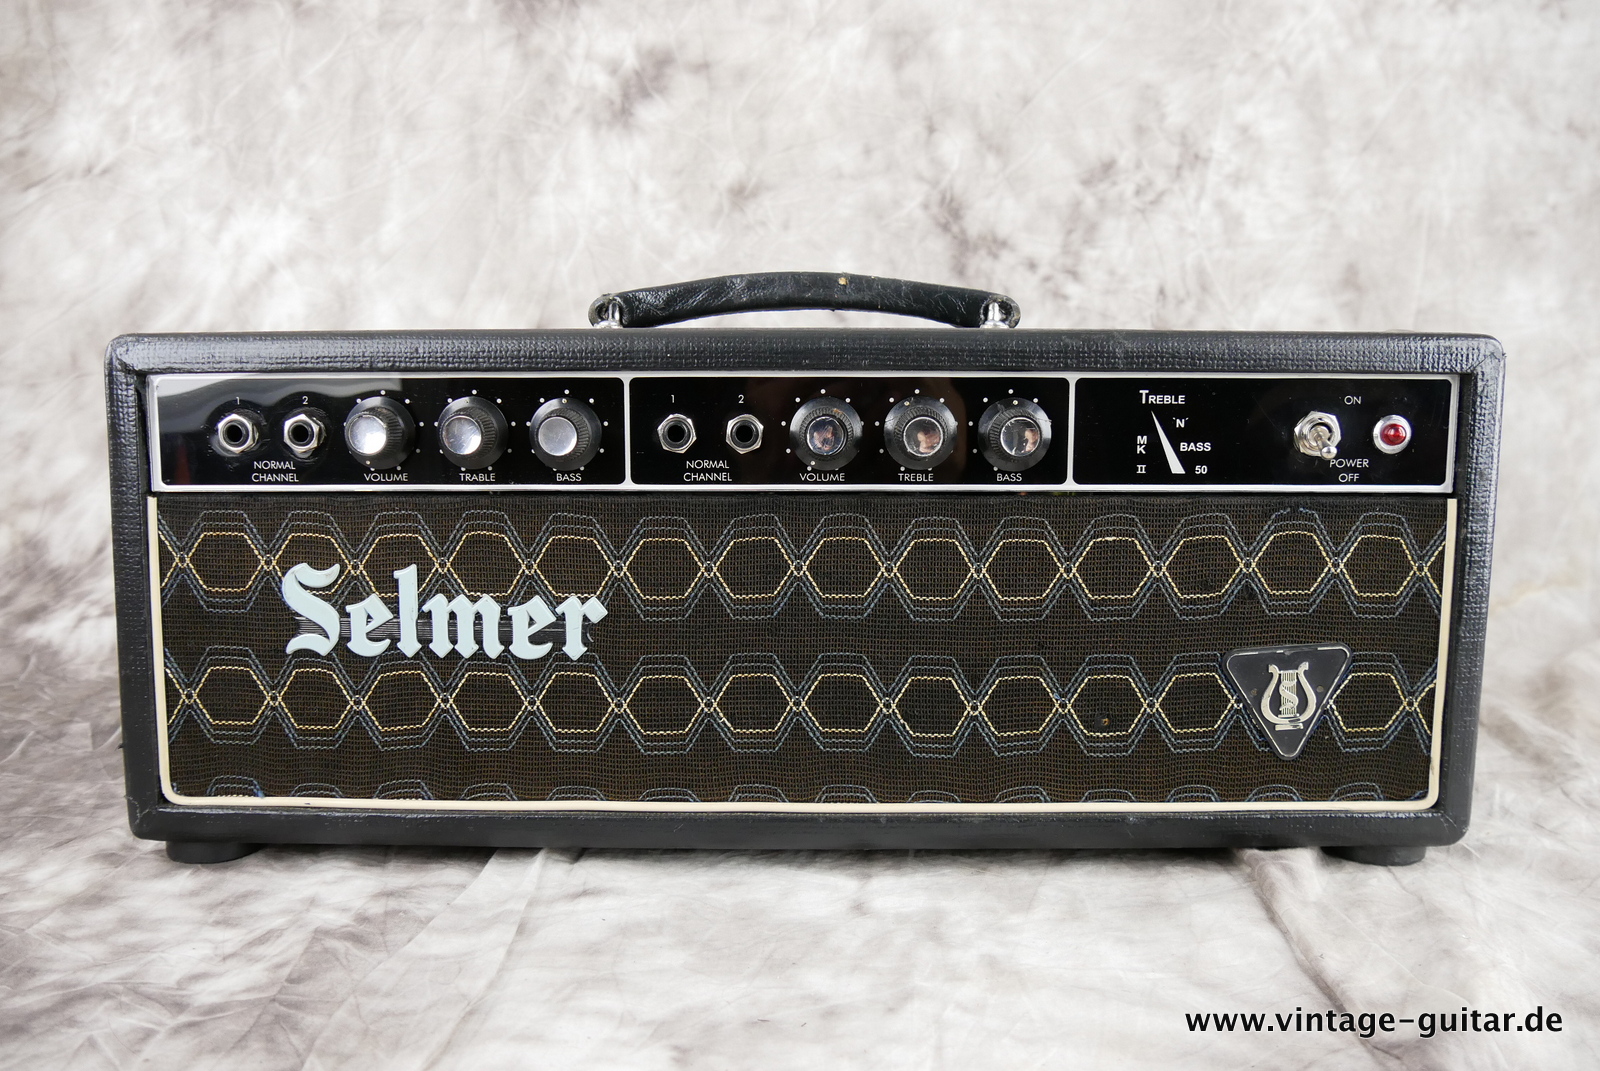 Selmer-treble-bass-mark2-mkII-mk2-1967-full-stack-cabinet-50watt-005.JPG